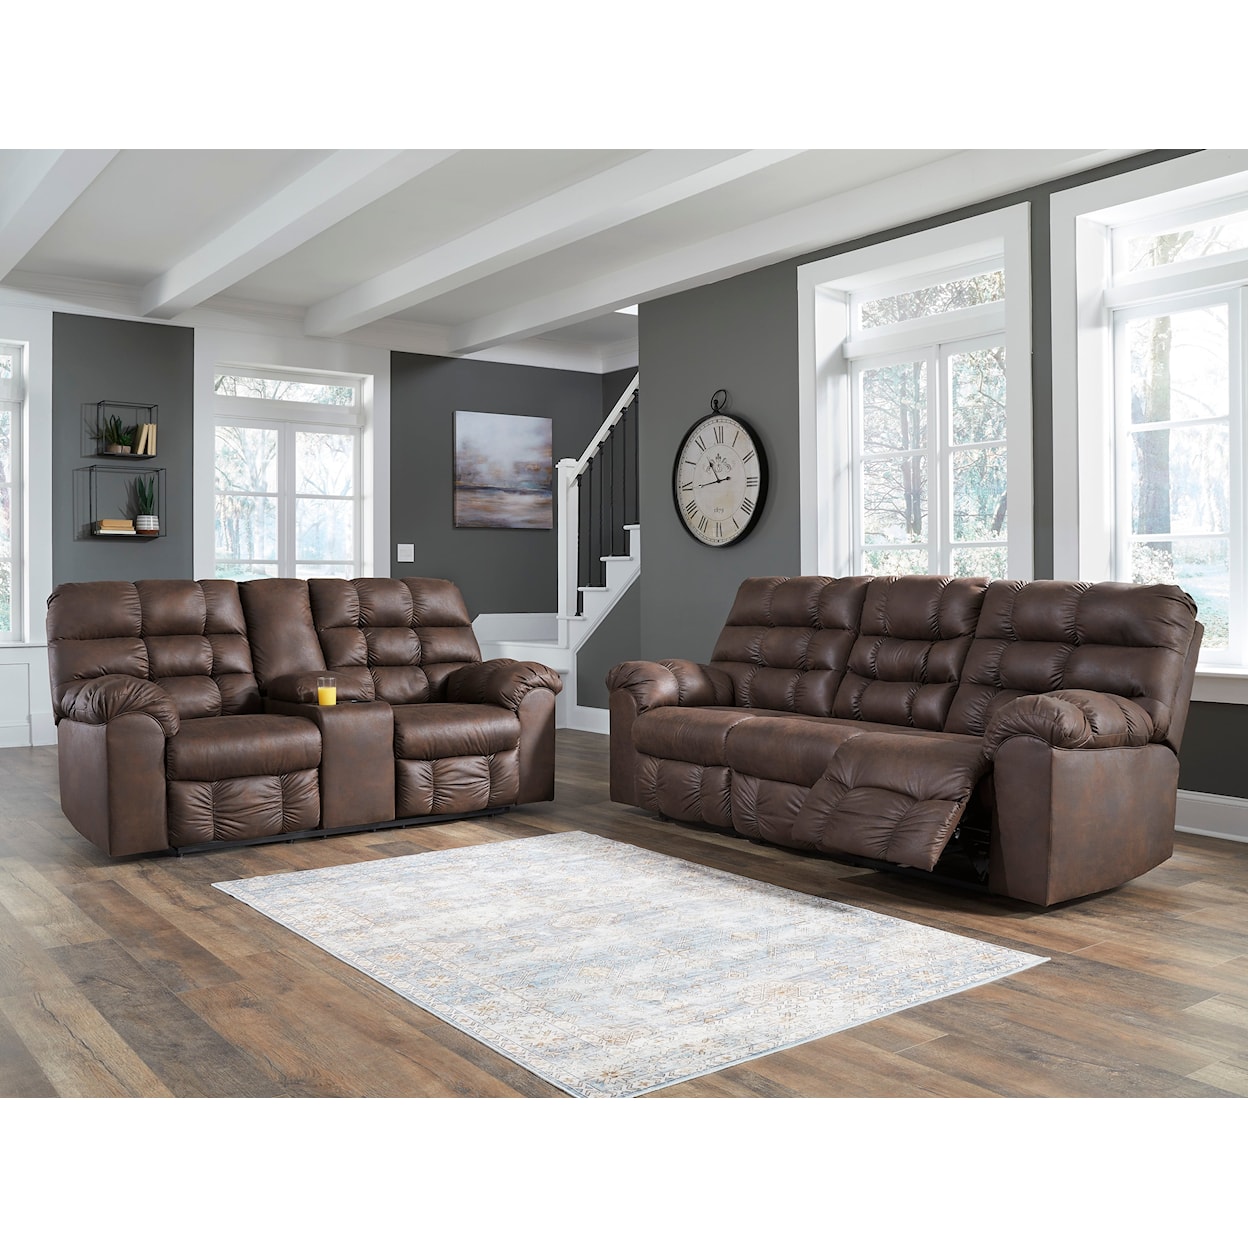 Ashley Furniture Signature Design Derwin Living Room Set